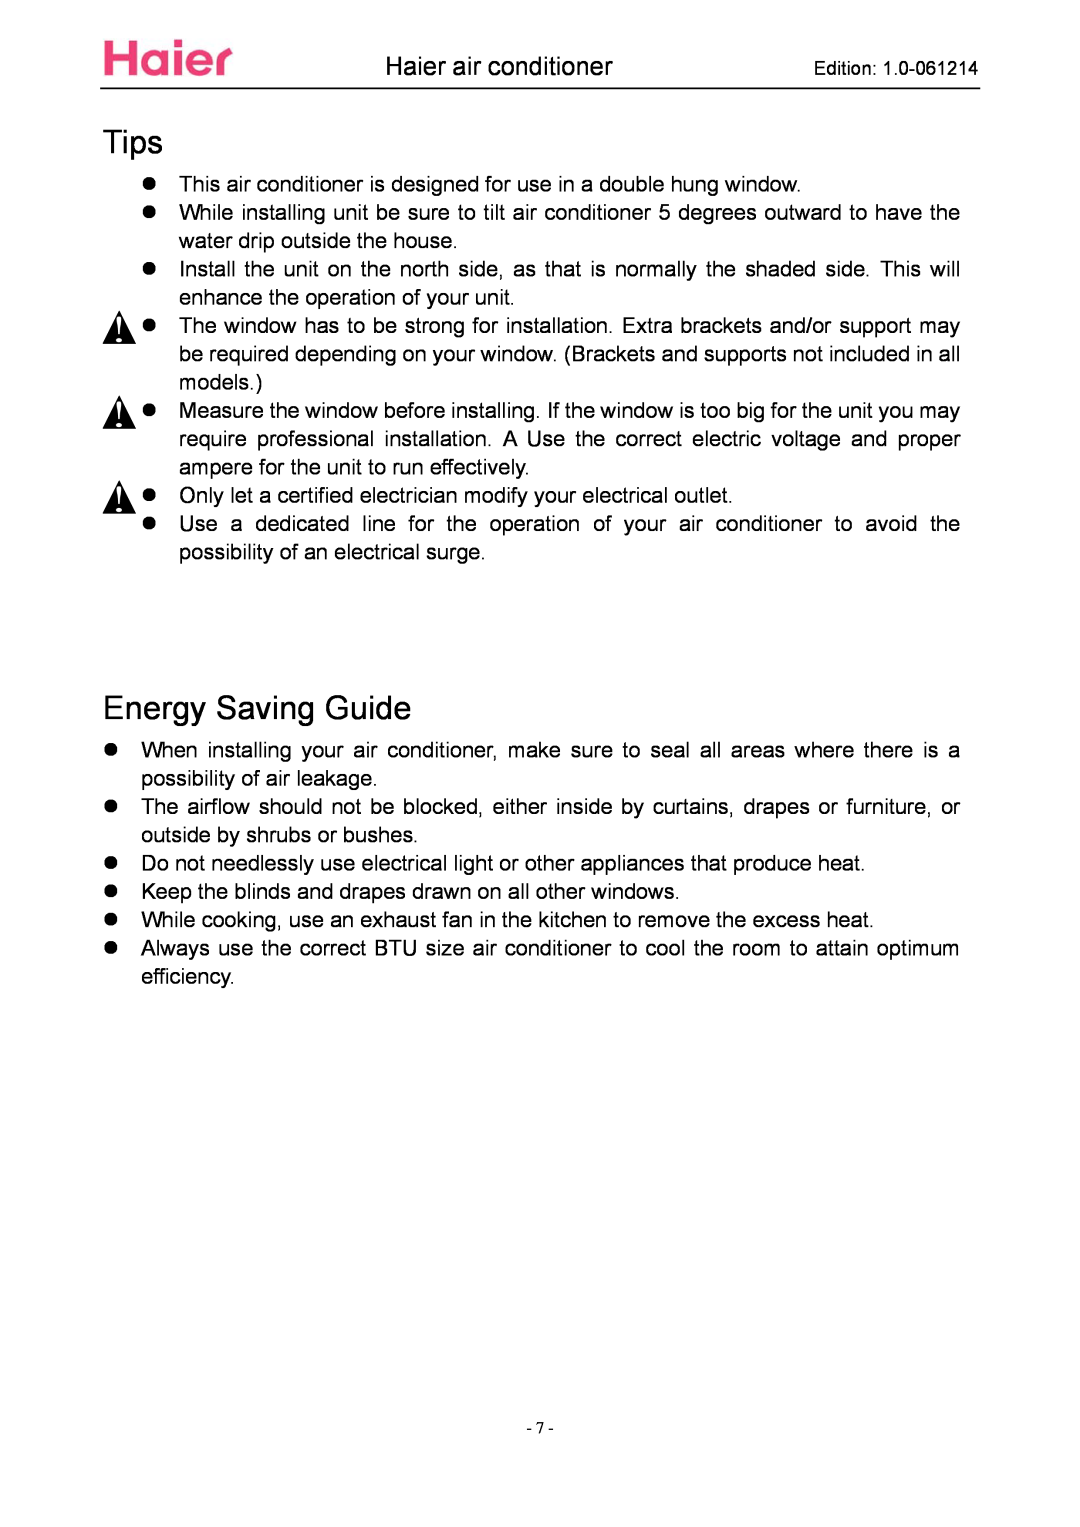 Haier ESA3087 service manual Tips, Energy Saving Guide, Haier air conditioner 